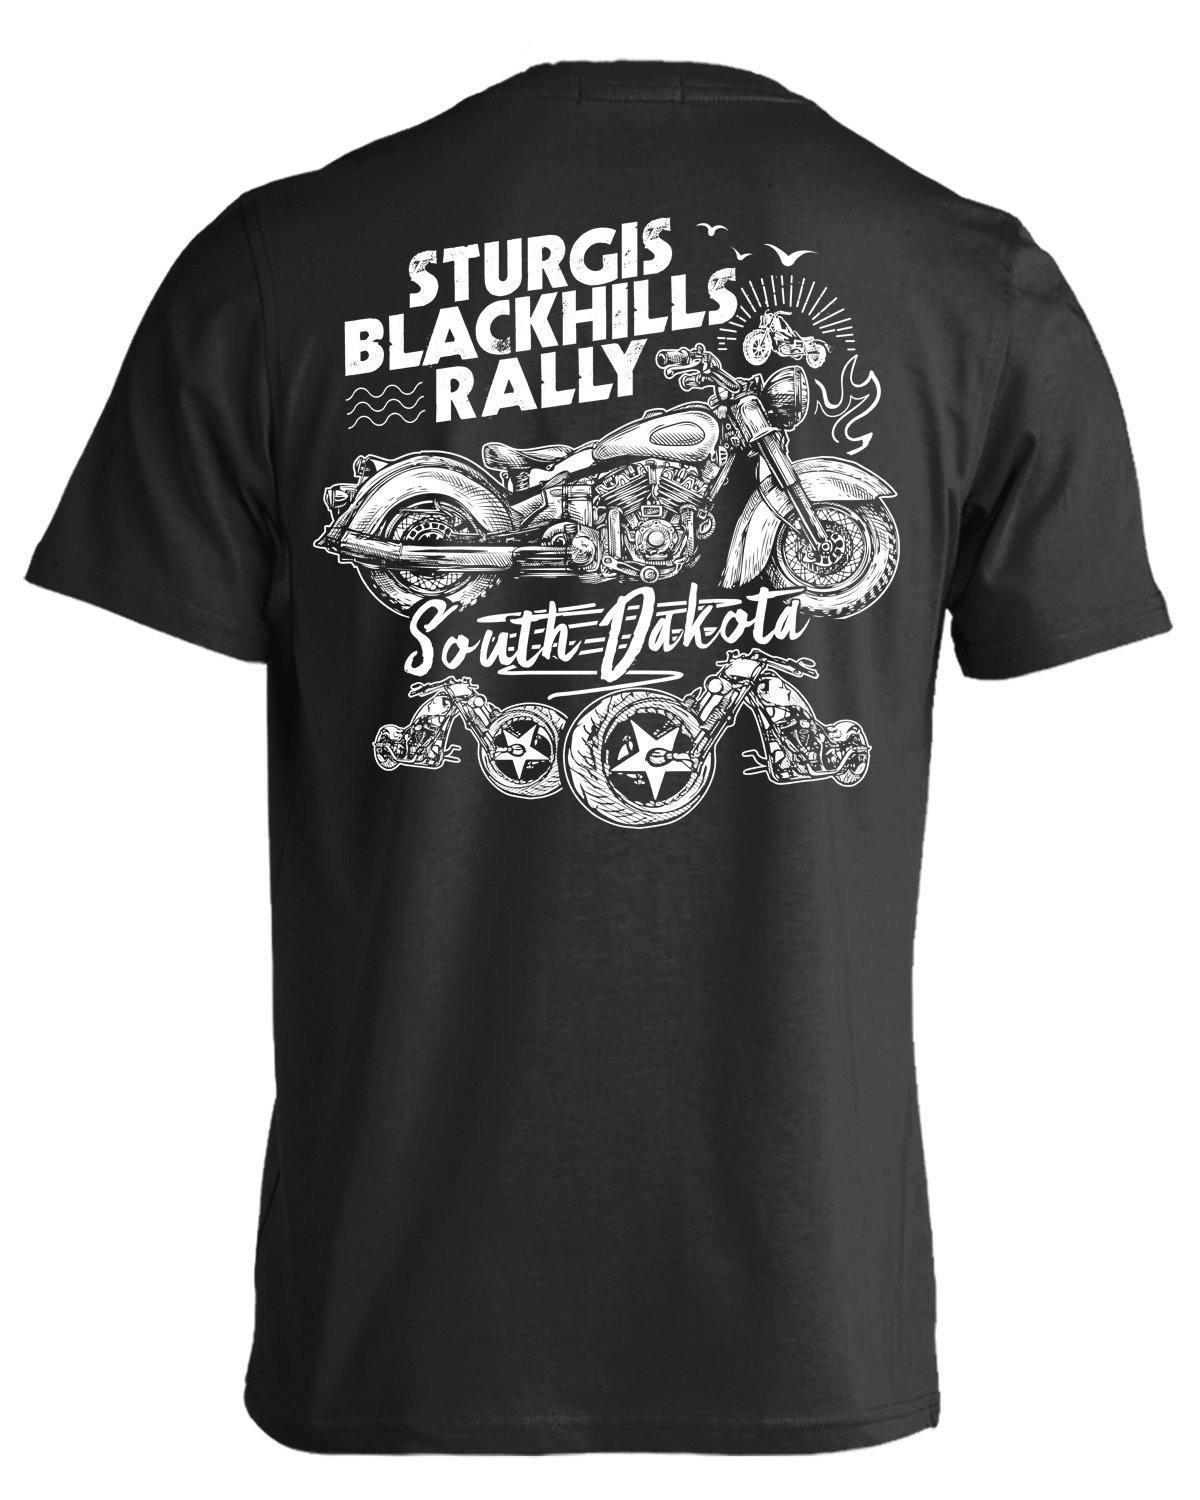 Sturgis Blackhills Rally T-Shirt & Hoodies - American Legend Rider